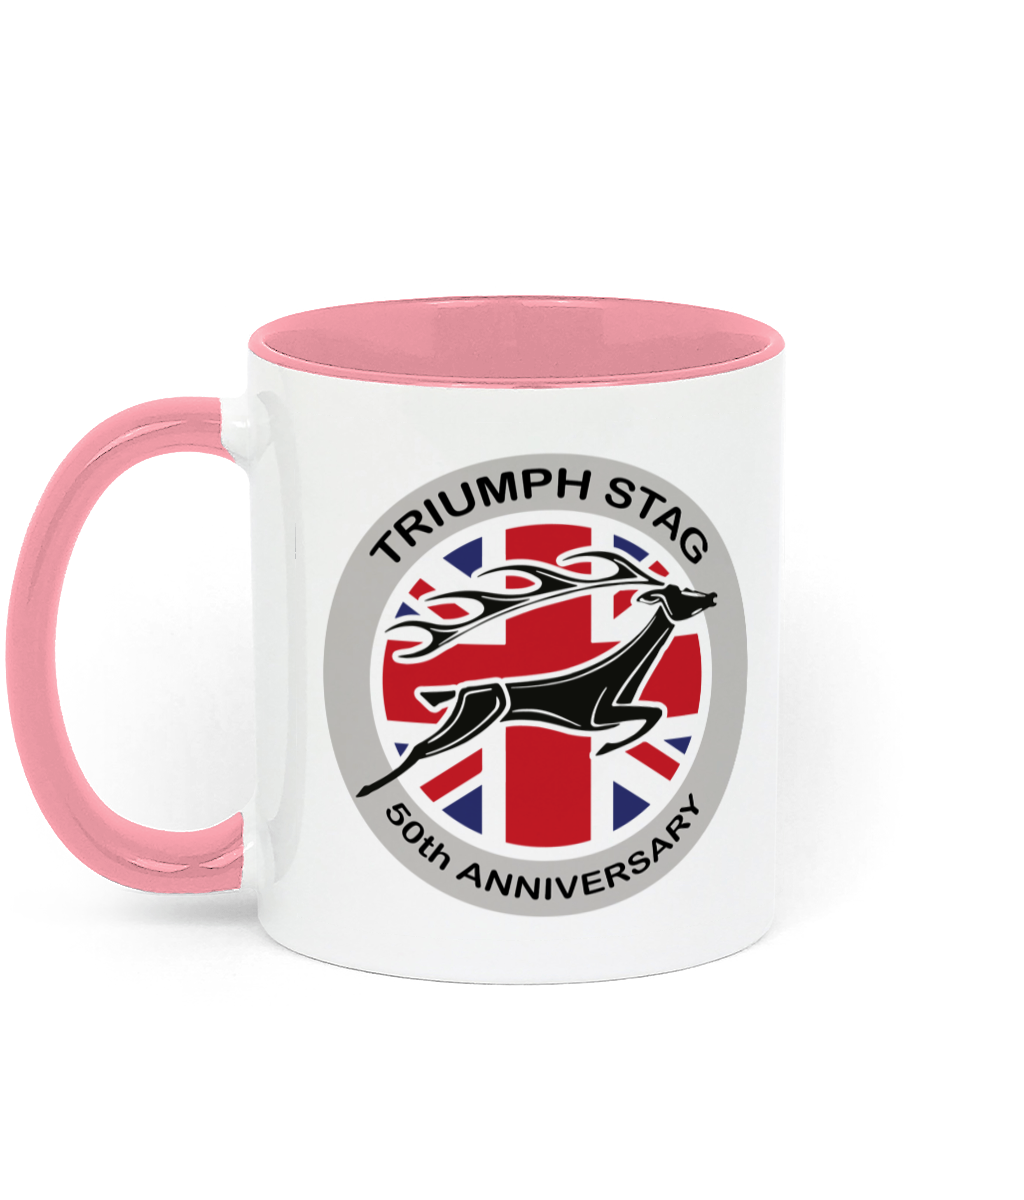 Triumph Stag 50th Anniversary Two Toned Ceramic Mug